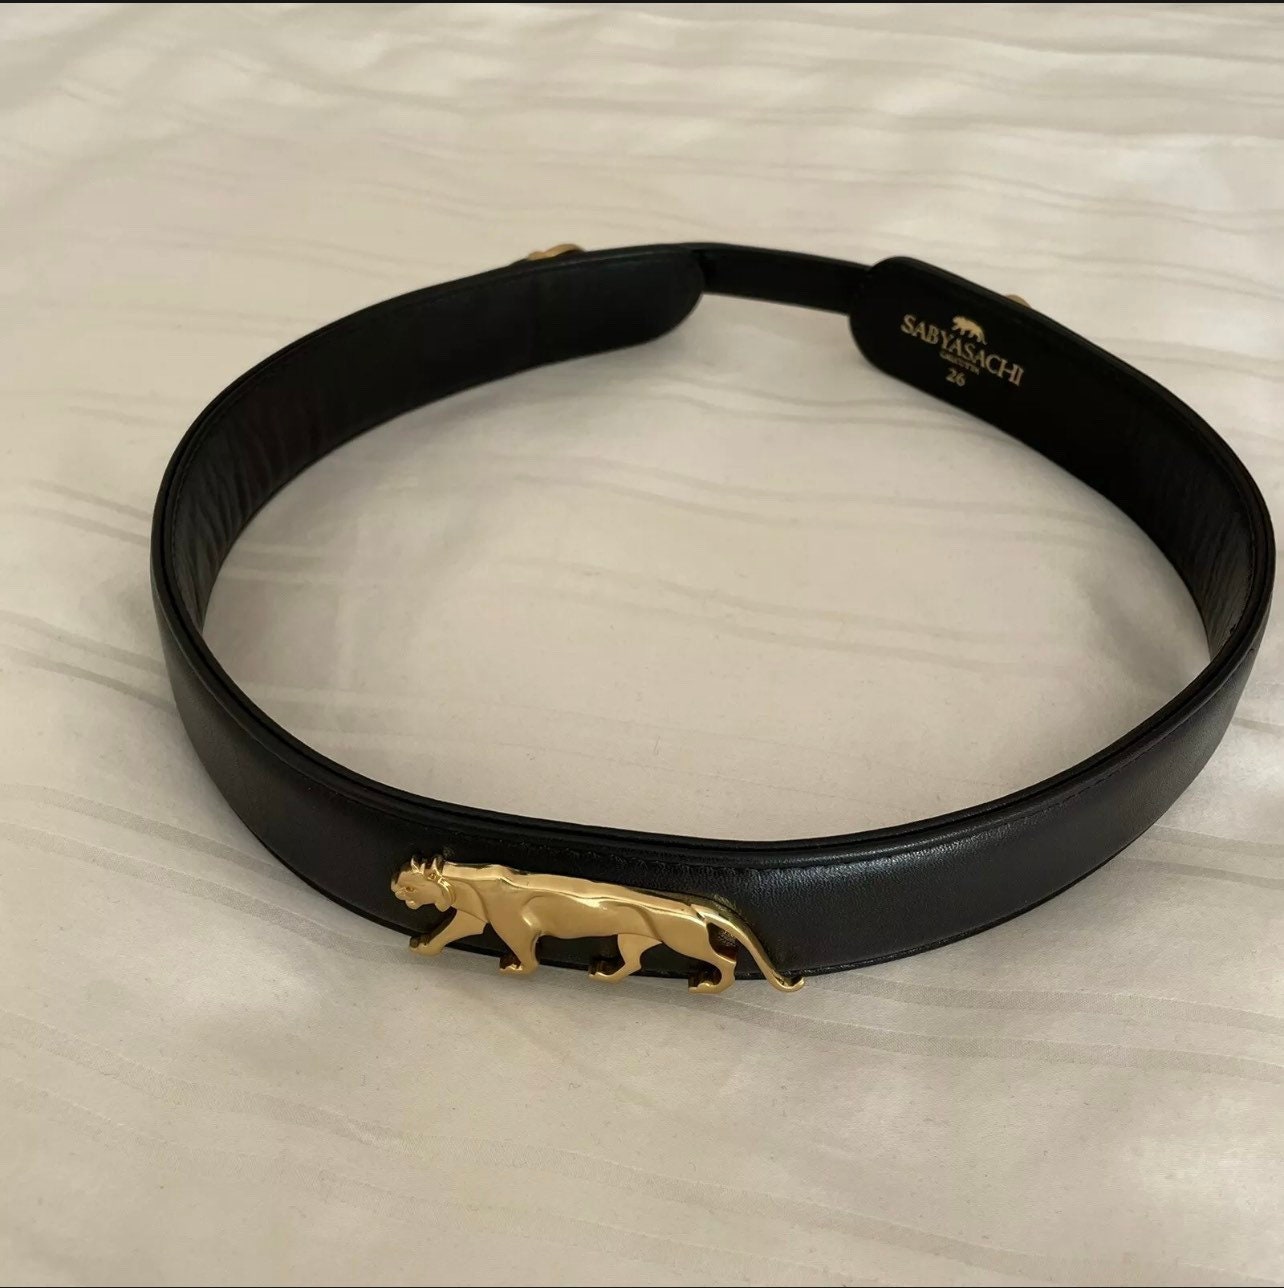 Deepika Padukone in Sabyasachi Stylish Waist Belt Tiger Logo.28-40 Inches  Waist Bellychain, Tagdi, Kamarbandh Indian Hip Belt, Kamarpatti 